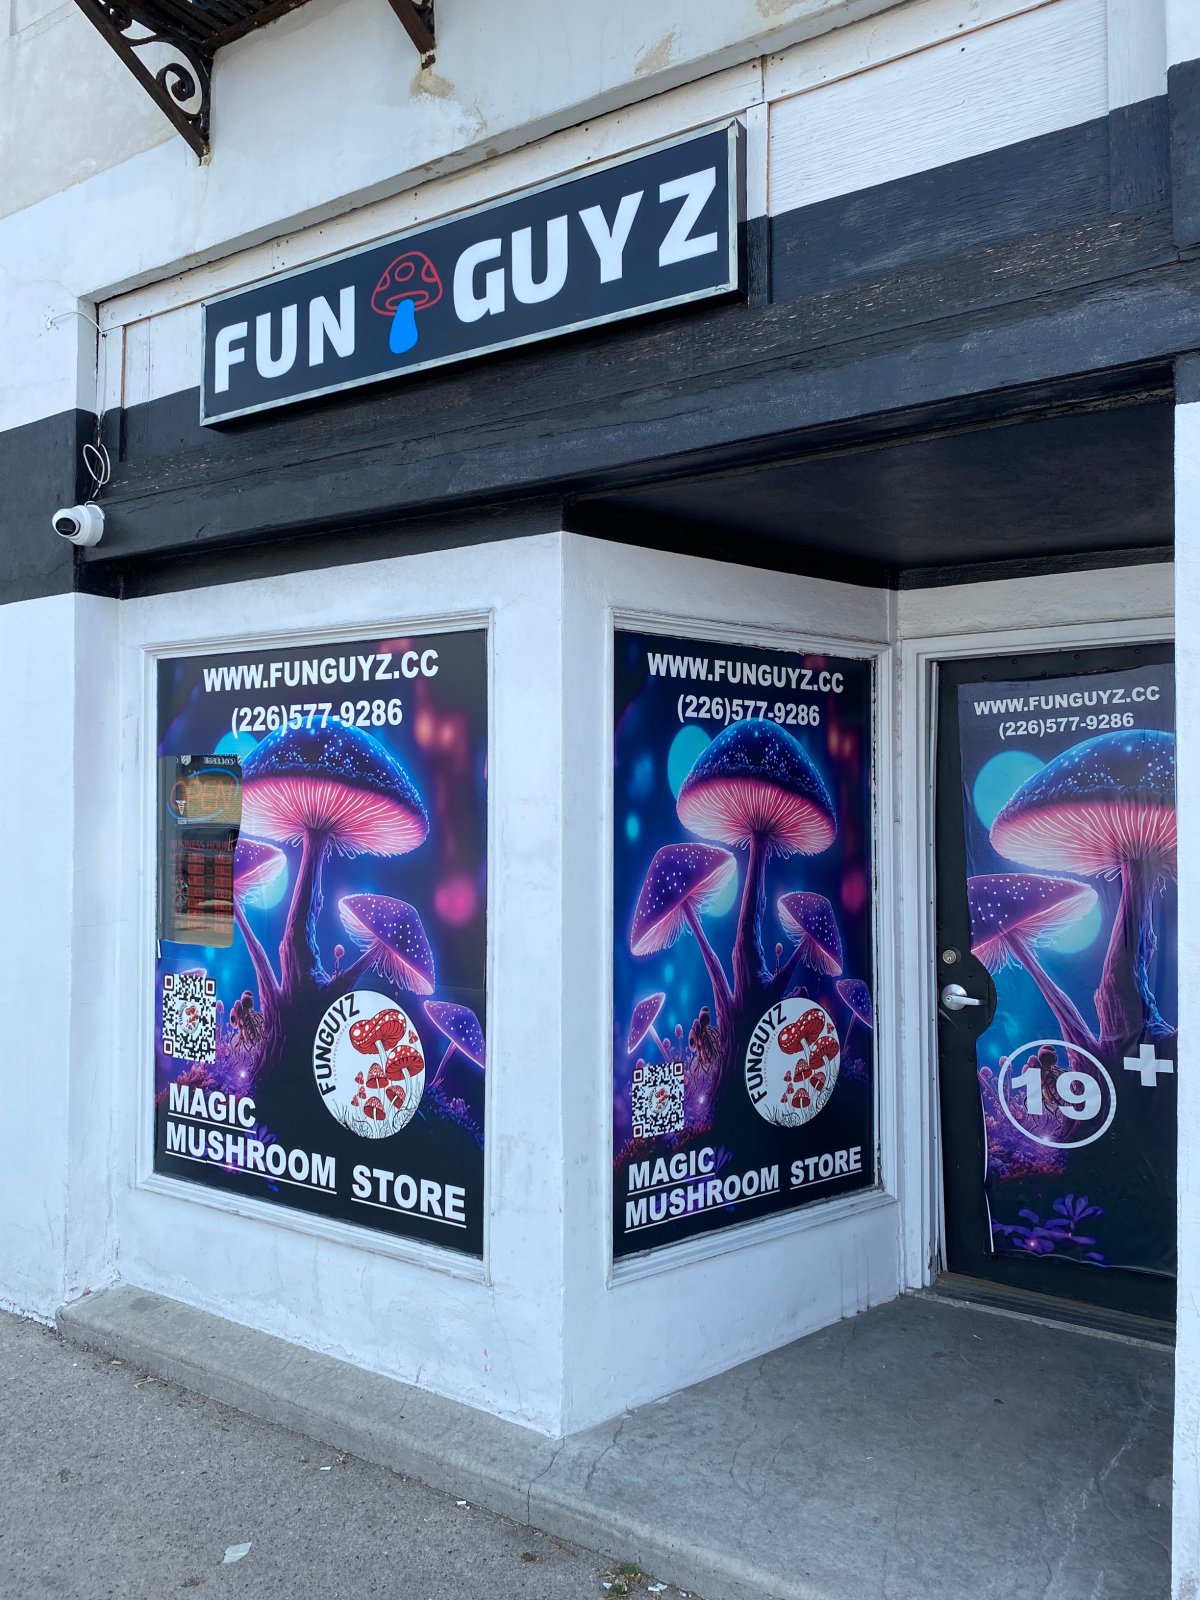 Fun Guyz, a magic mushroom dispensary, opened its doors in downtown London on May 12, 2023.